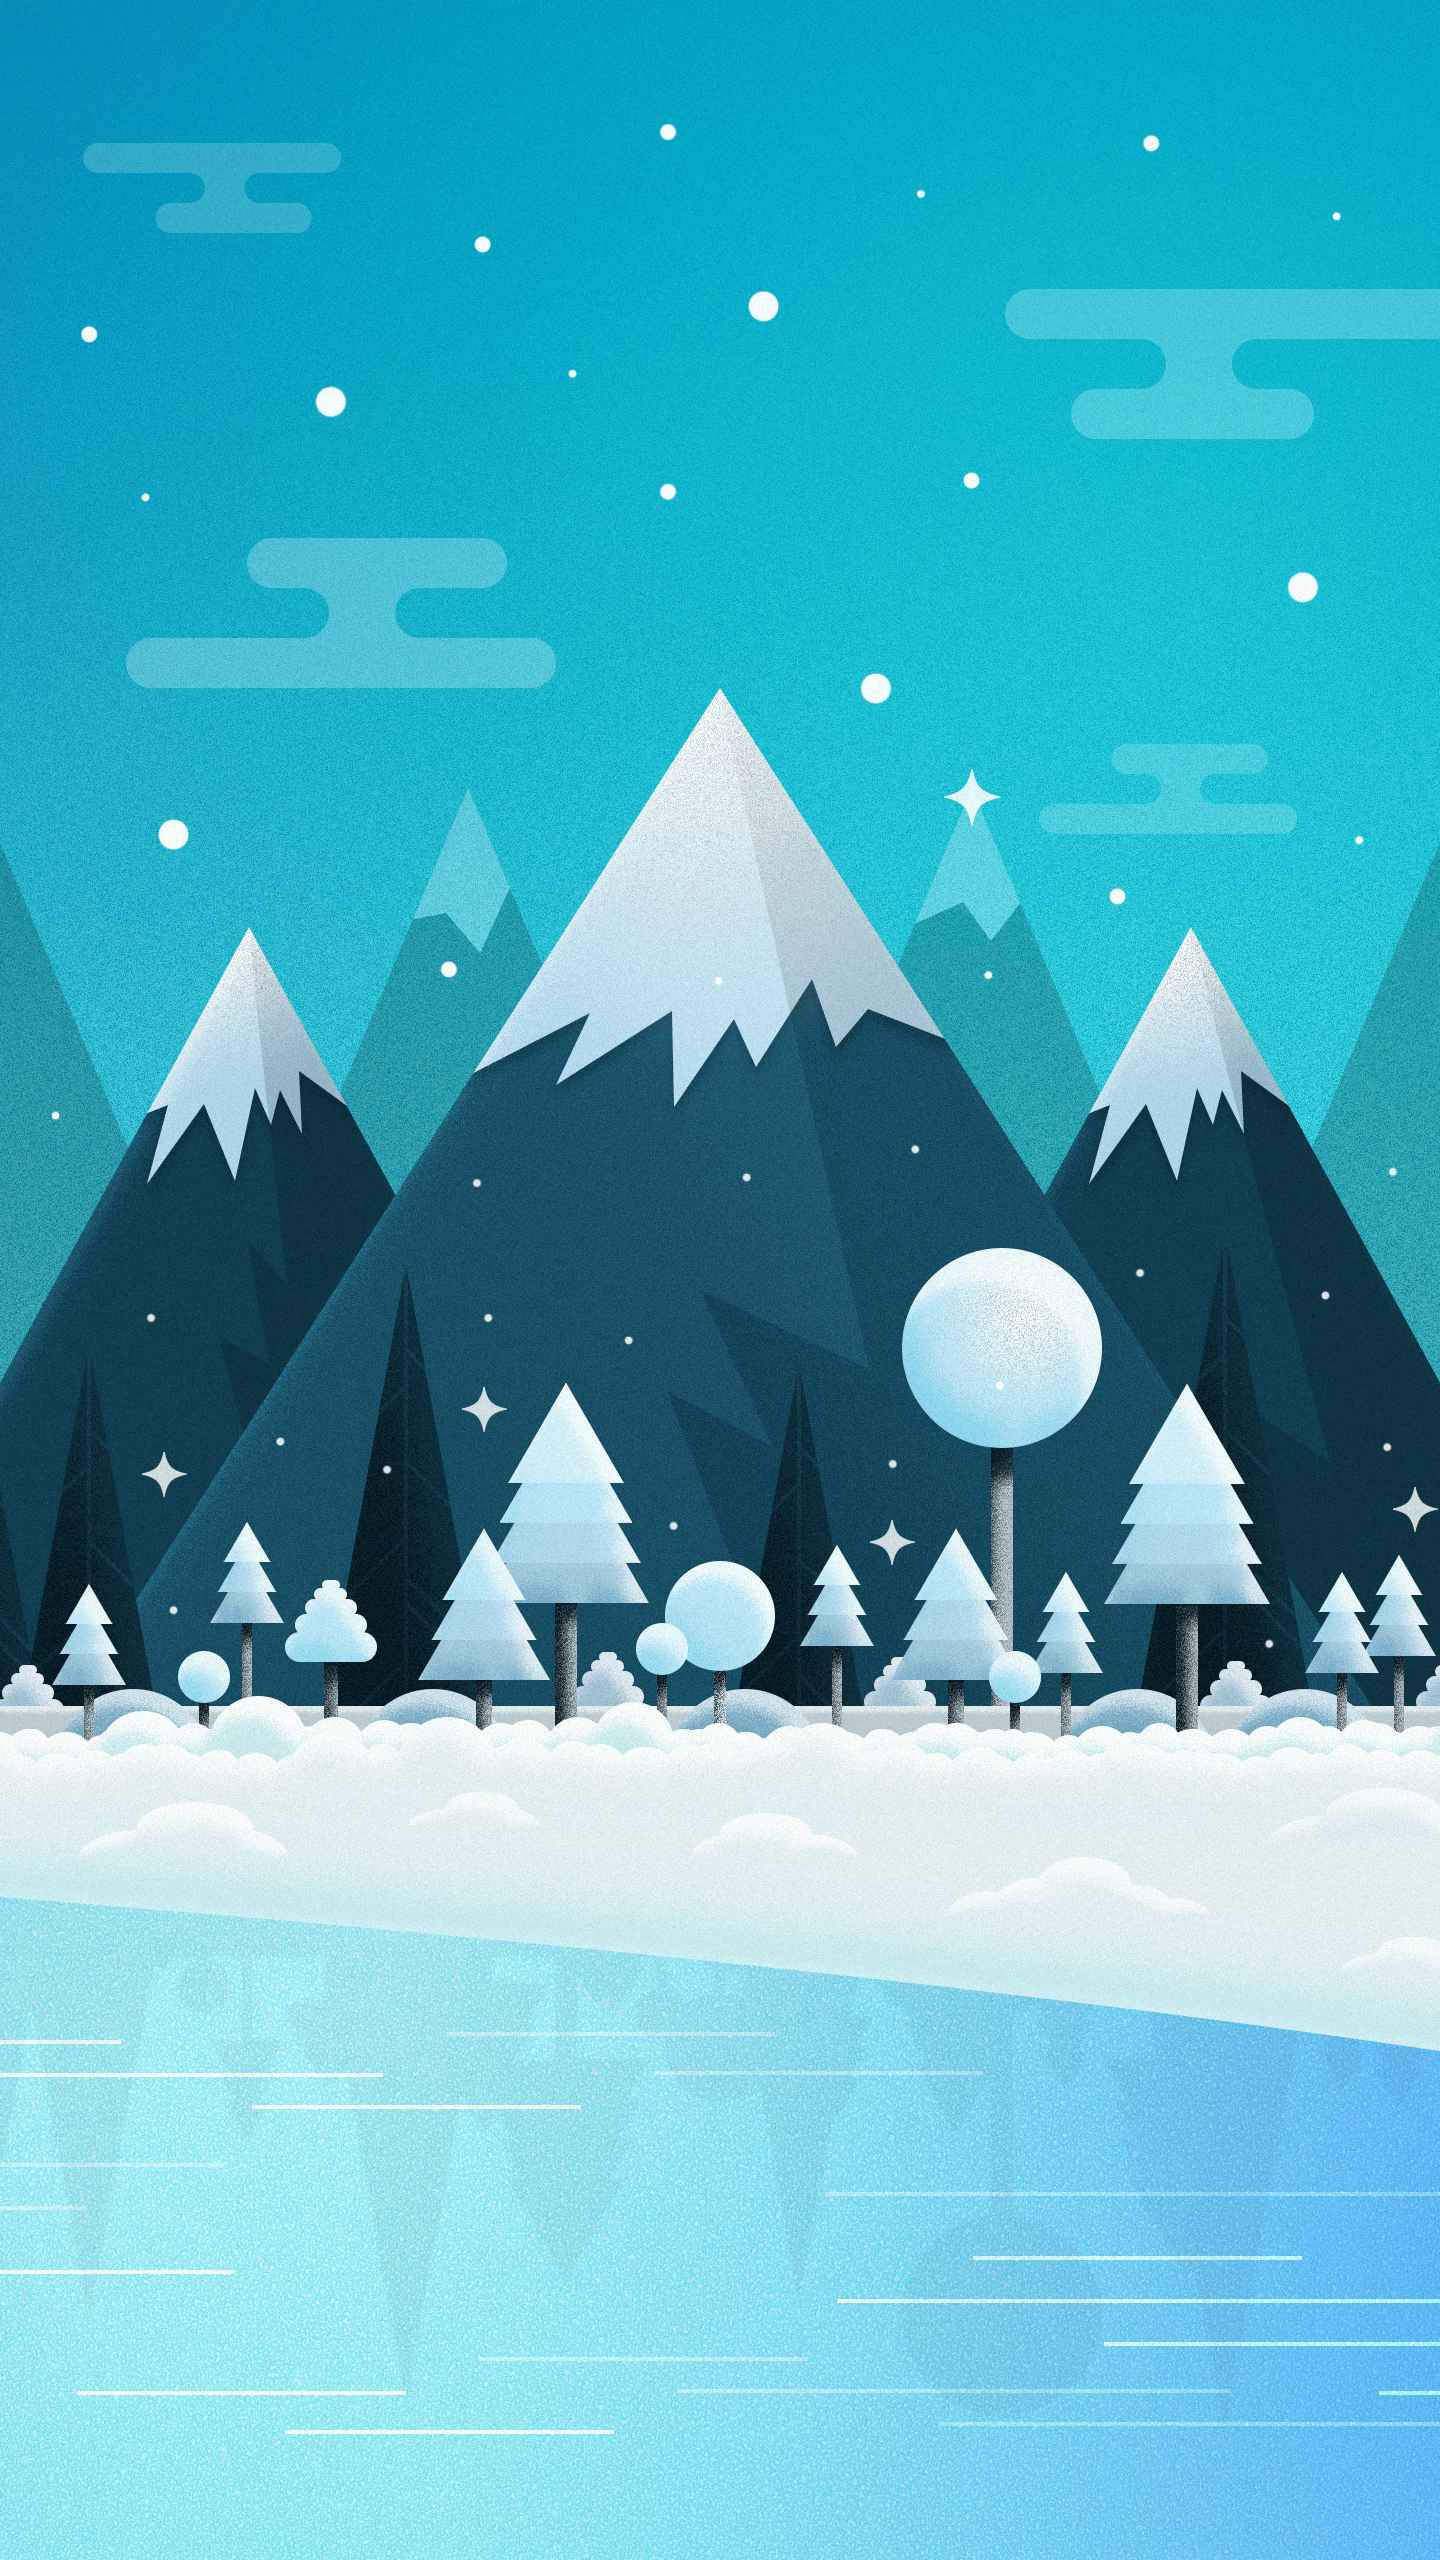 Snowfall Mountains IPhone Wallpaper - IPhone Wallpapers : iPhone Wallpapers